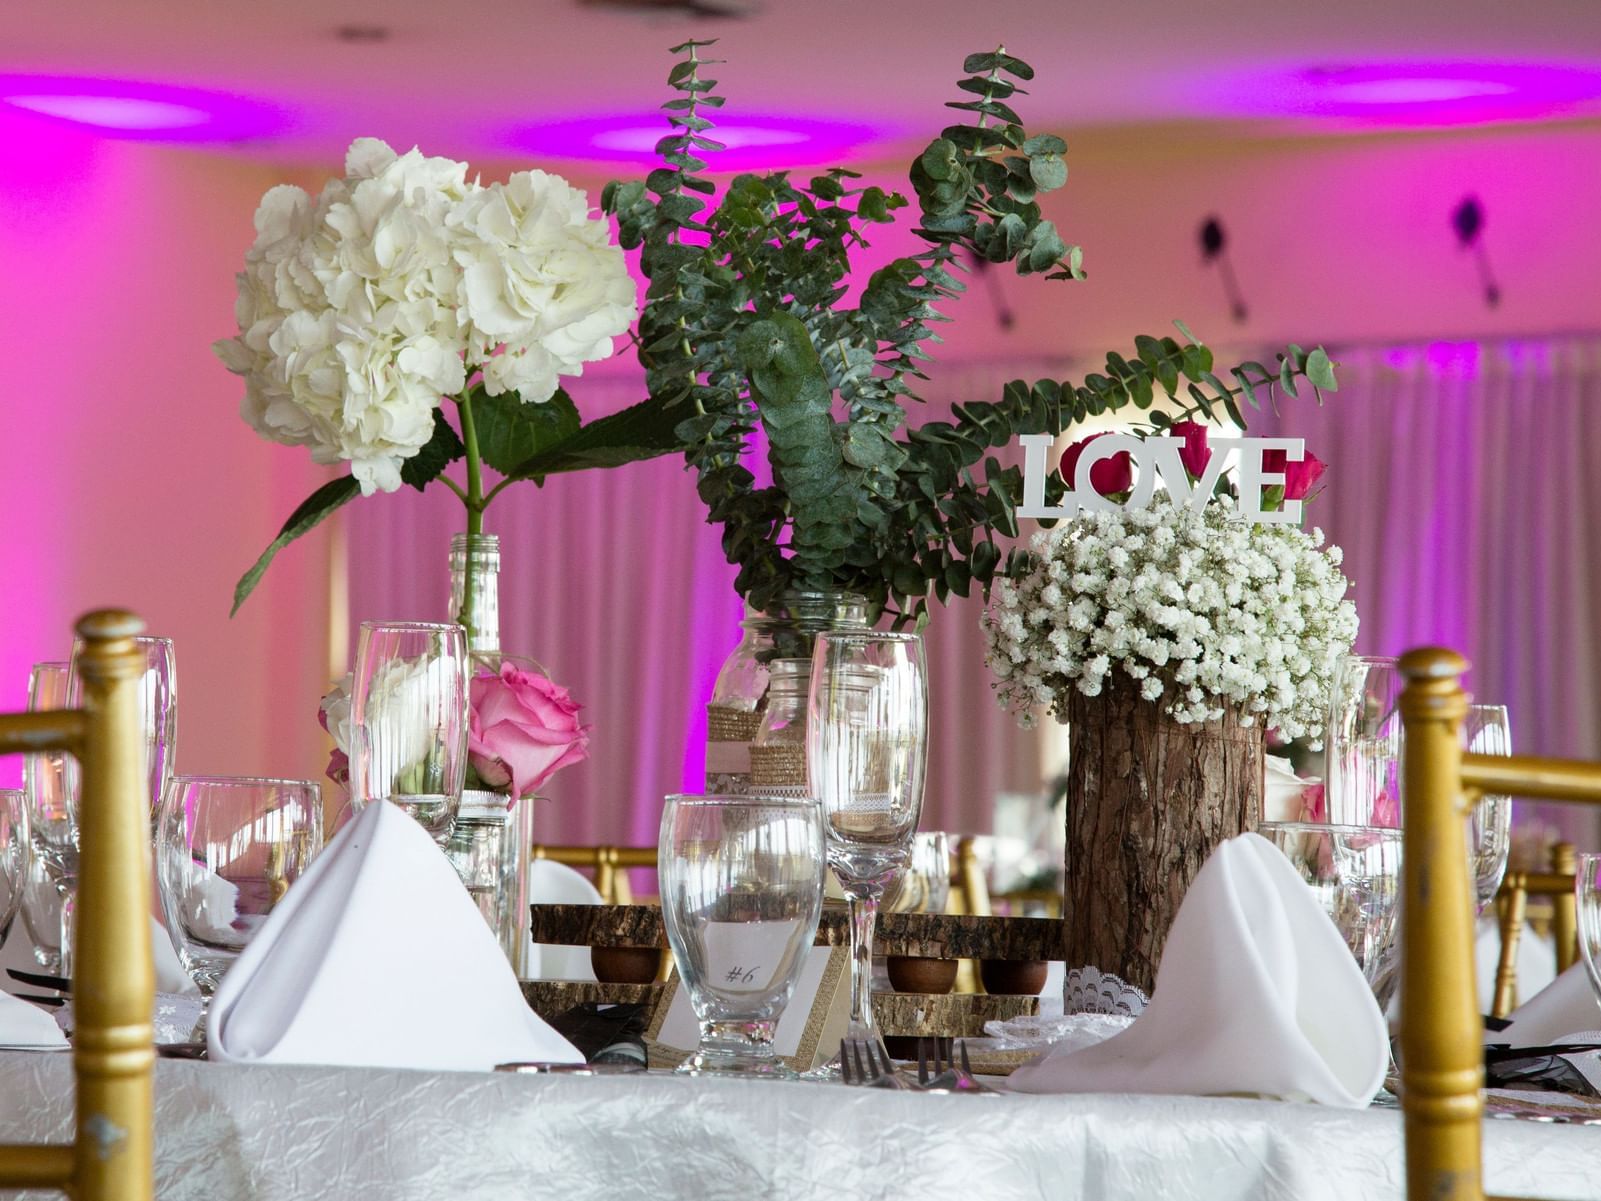 Flower decors on table in wedding at Gamboa Rainforest Resort